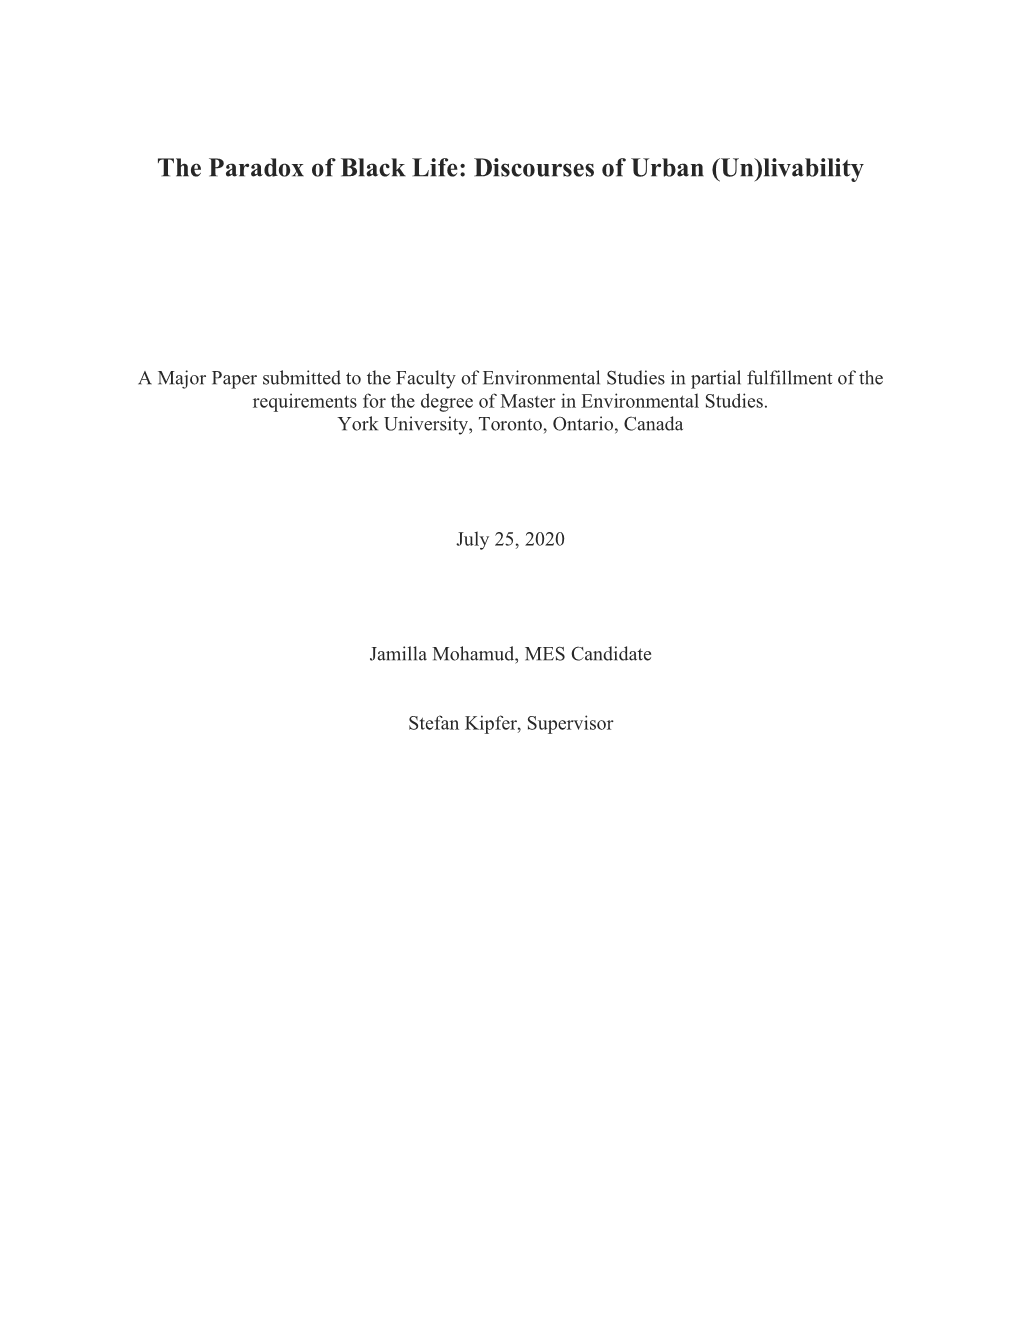 The Paradox of Black Life: Discourses of Urban (Un)Livability